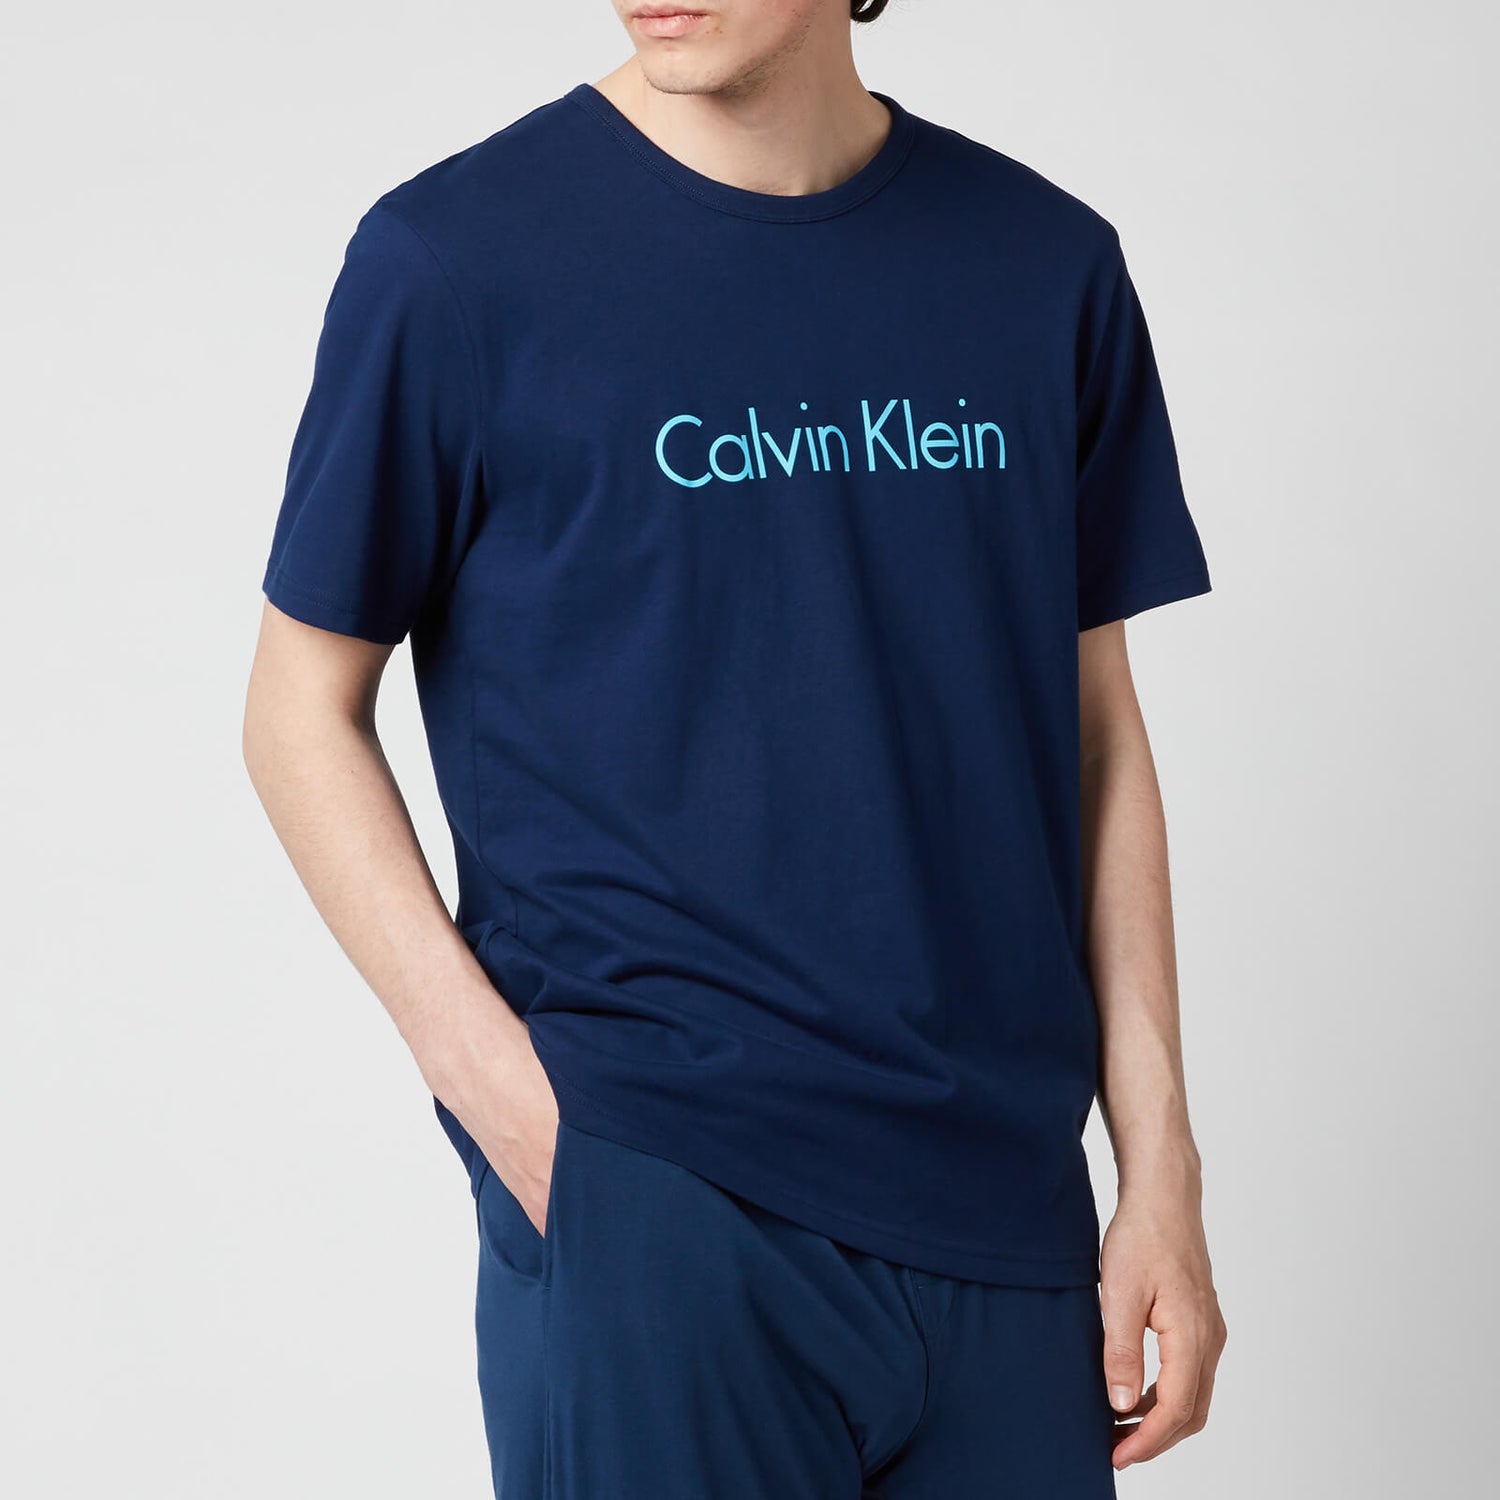 Calvin Klein Men's Crewneck T-Shirt - New Navy